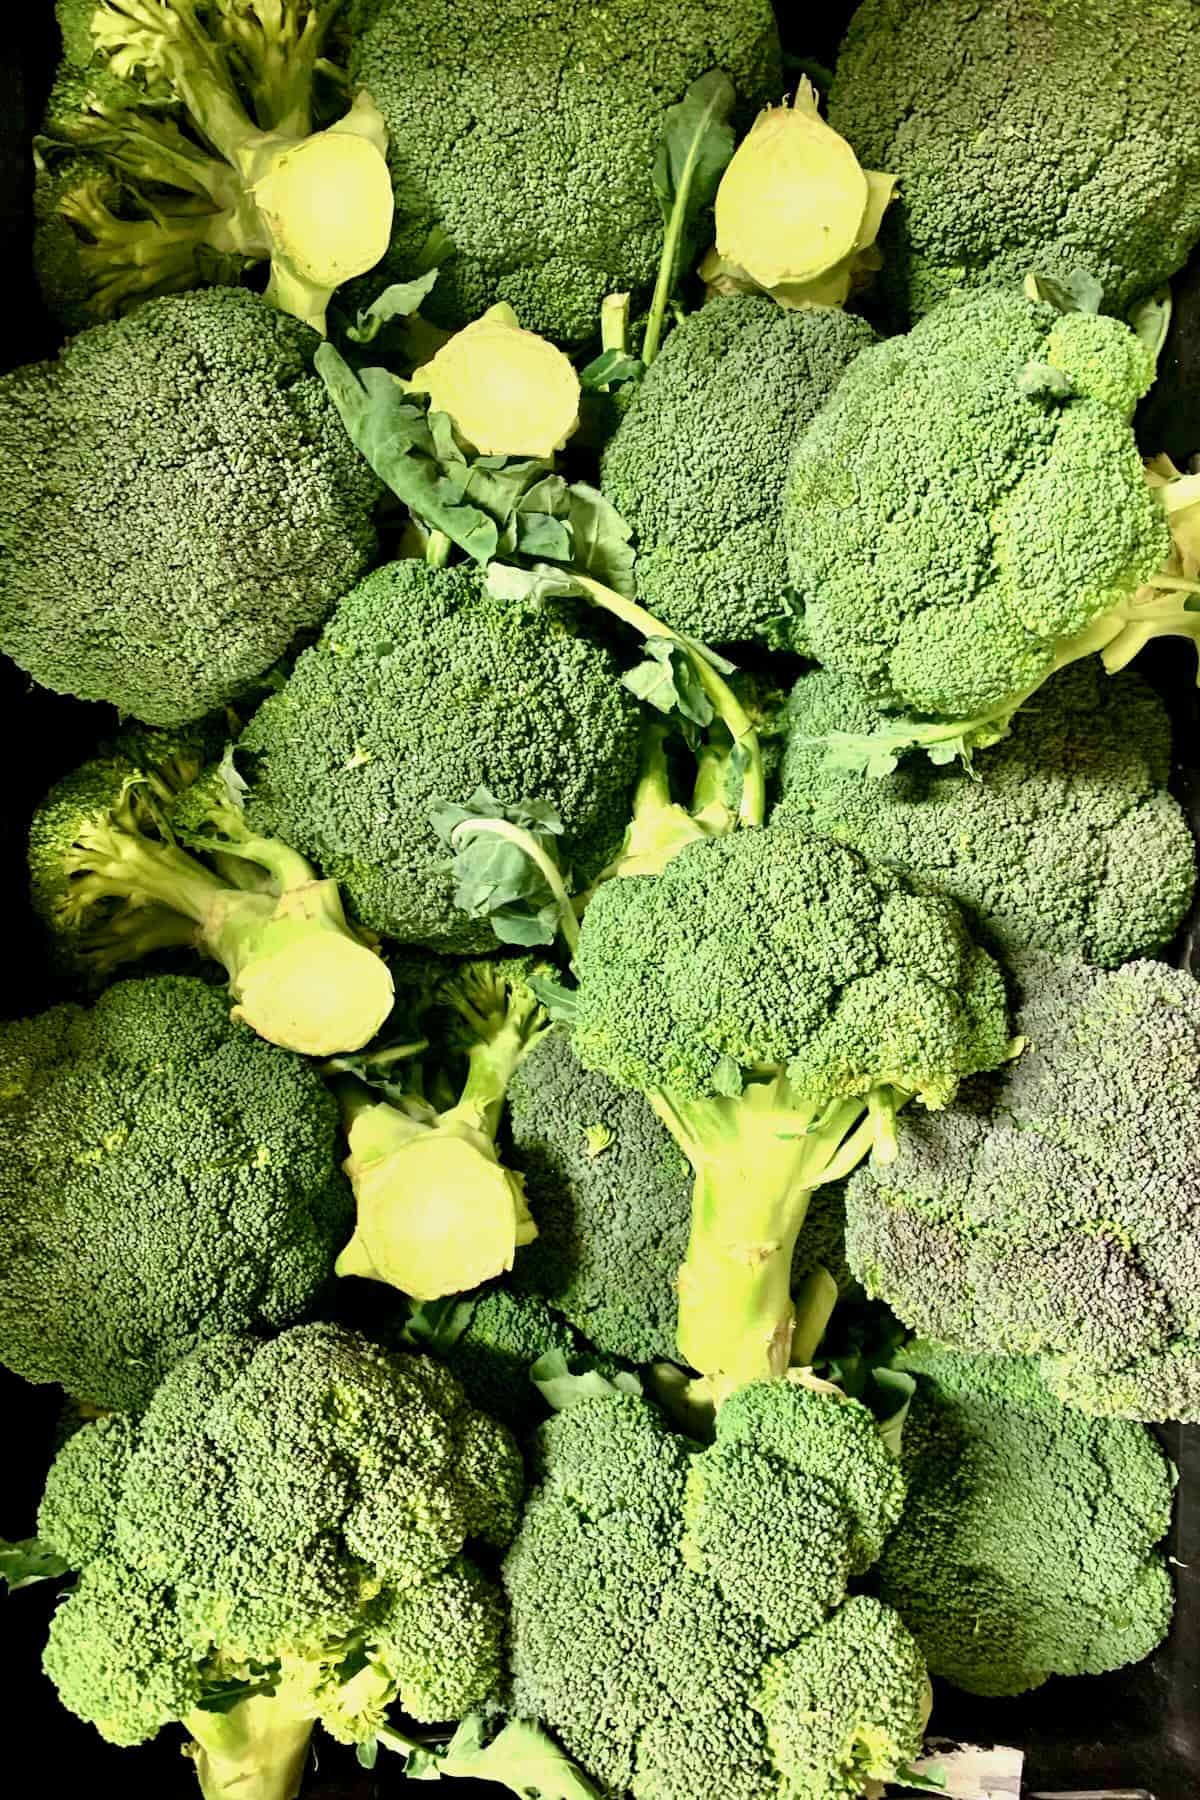 Few small heads of broccoli